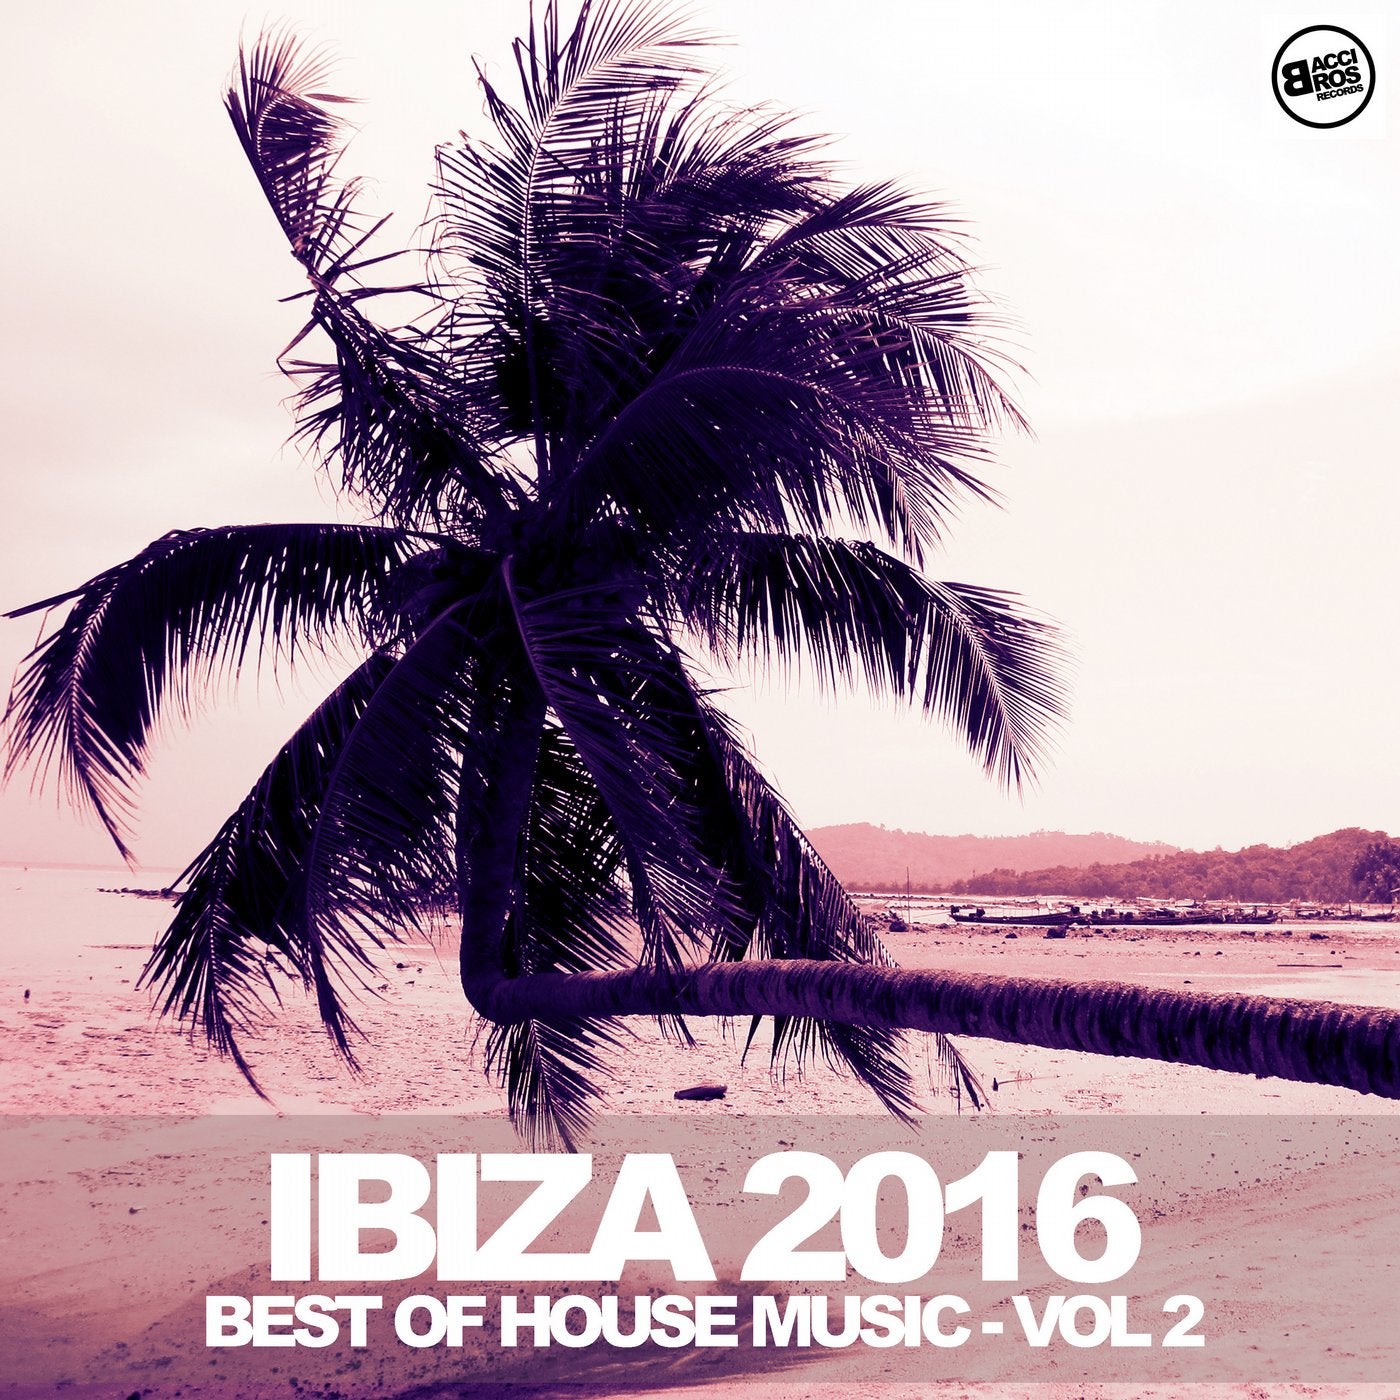 Ibiza 2016 - Best of House Music Vol. 2